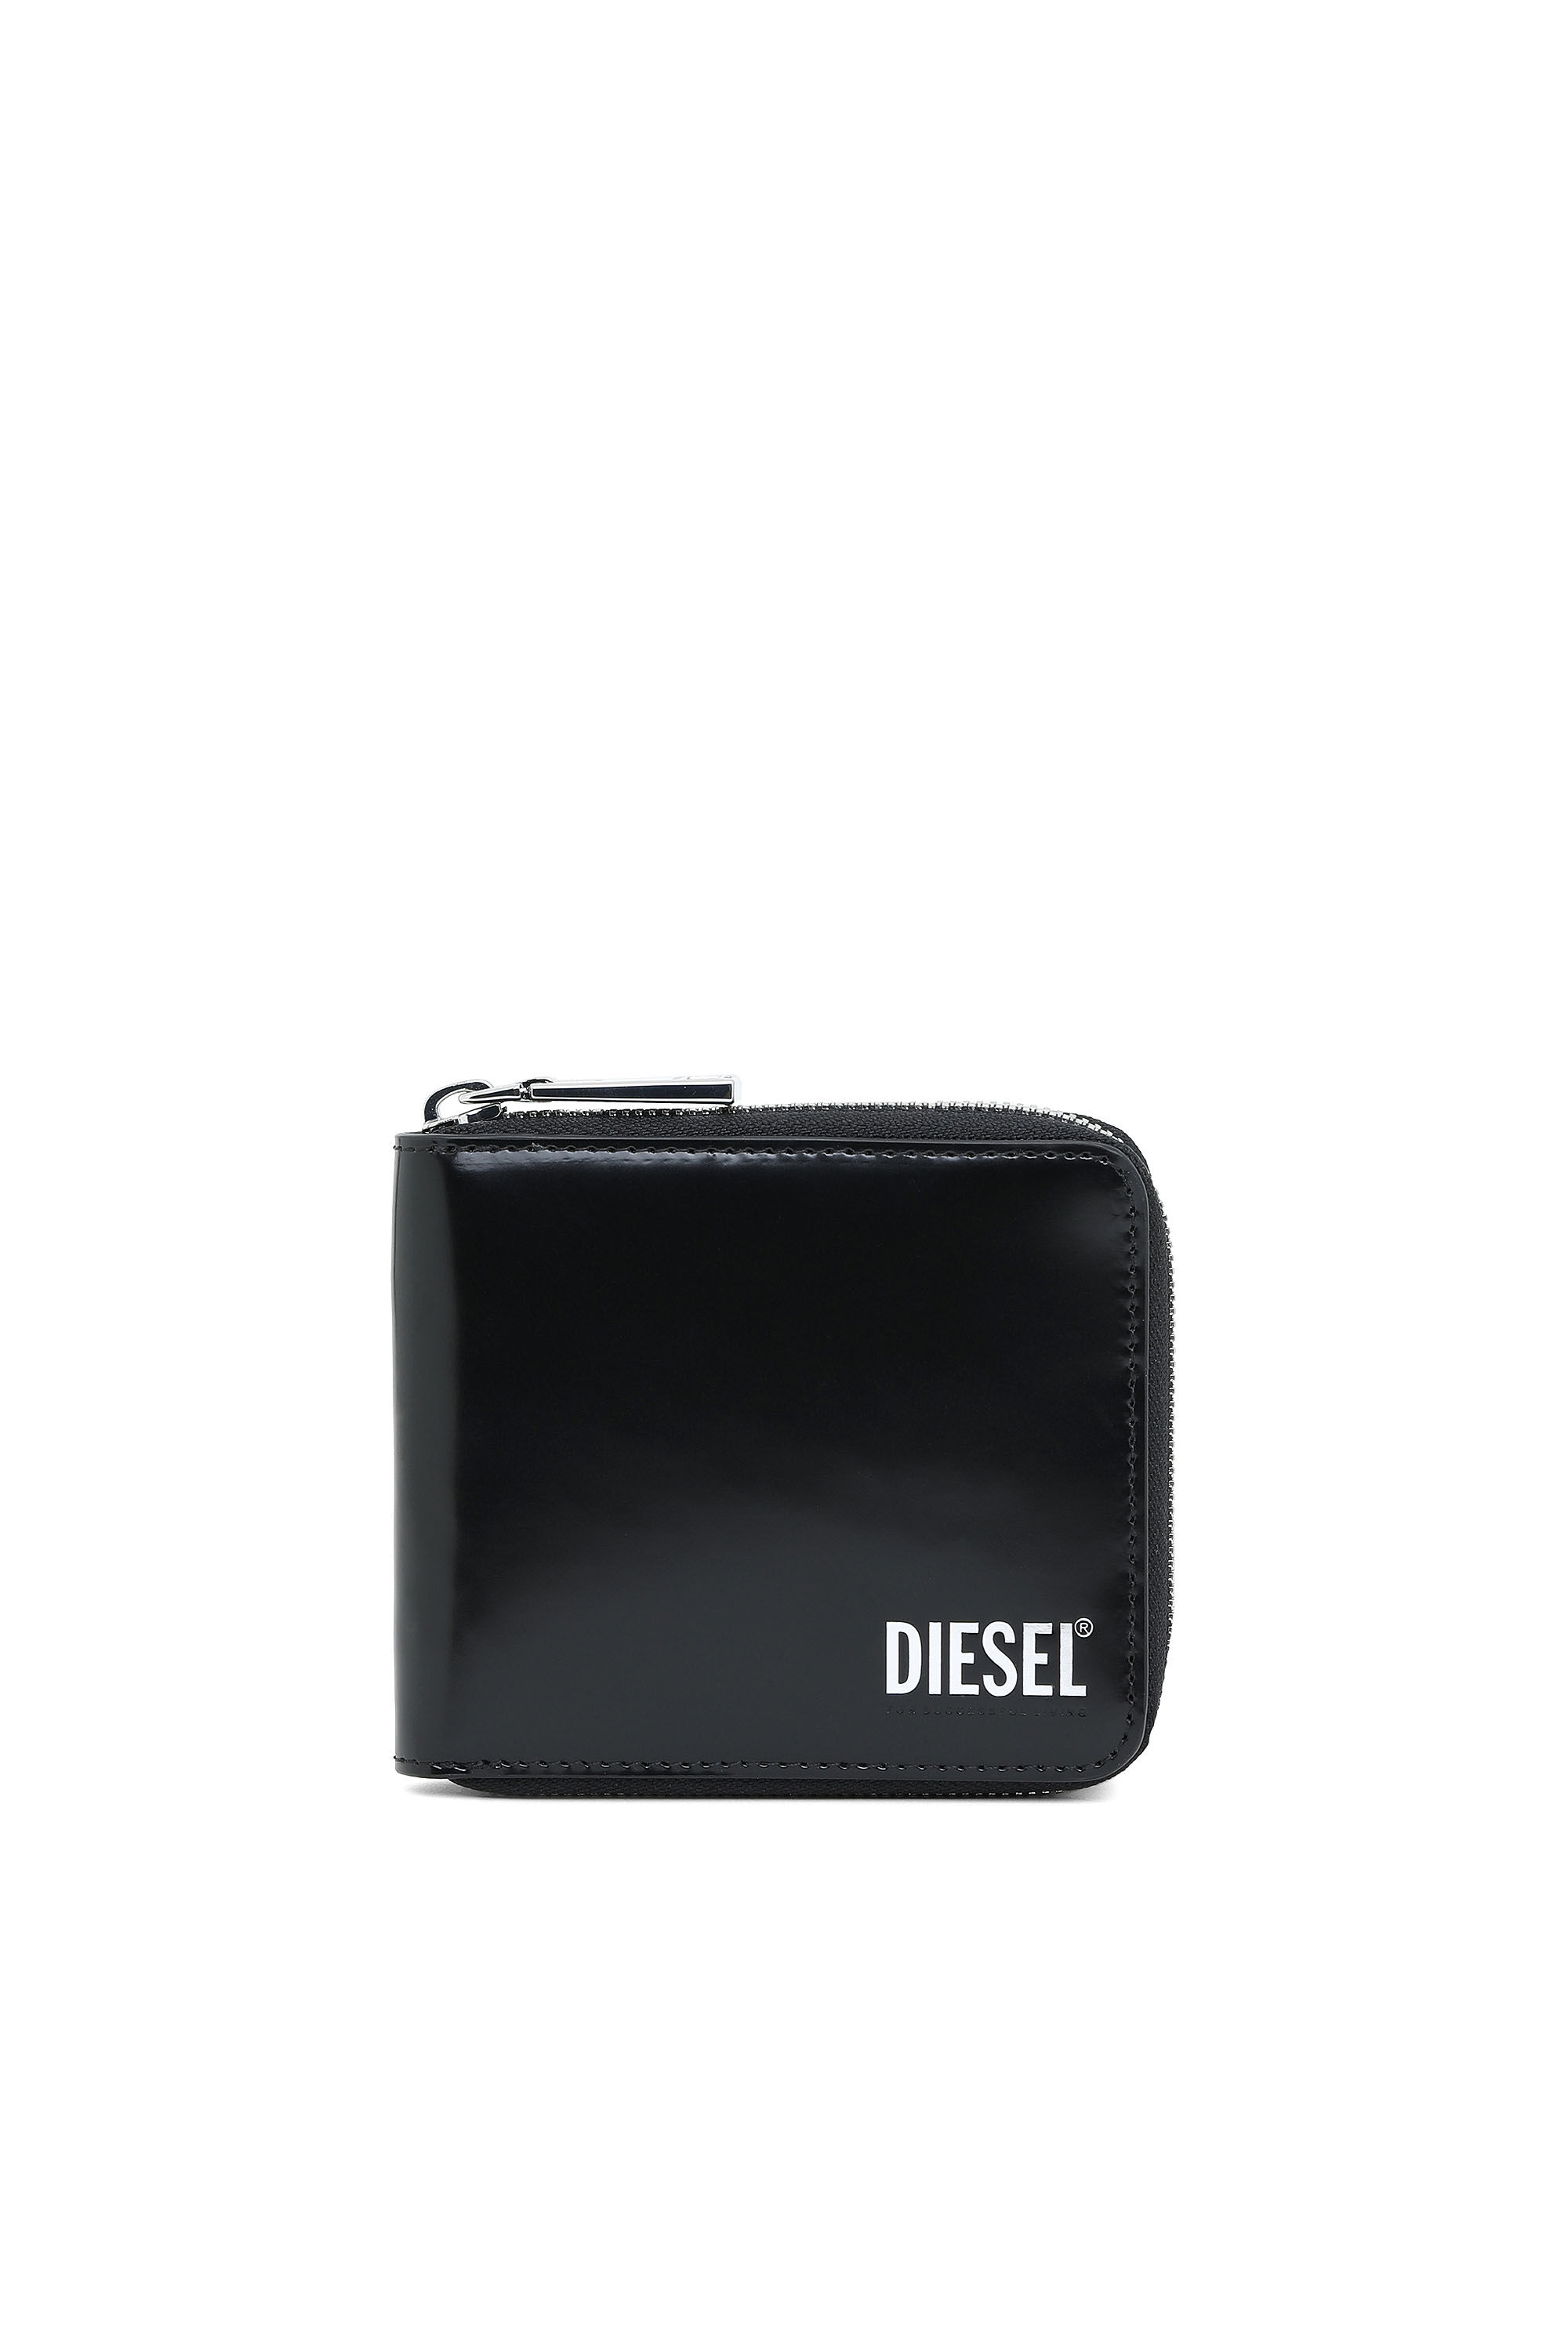 Diesel - HIRESH XS ZIPPI, Black - Image 1